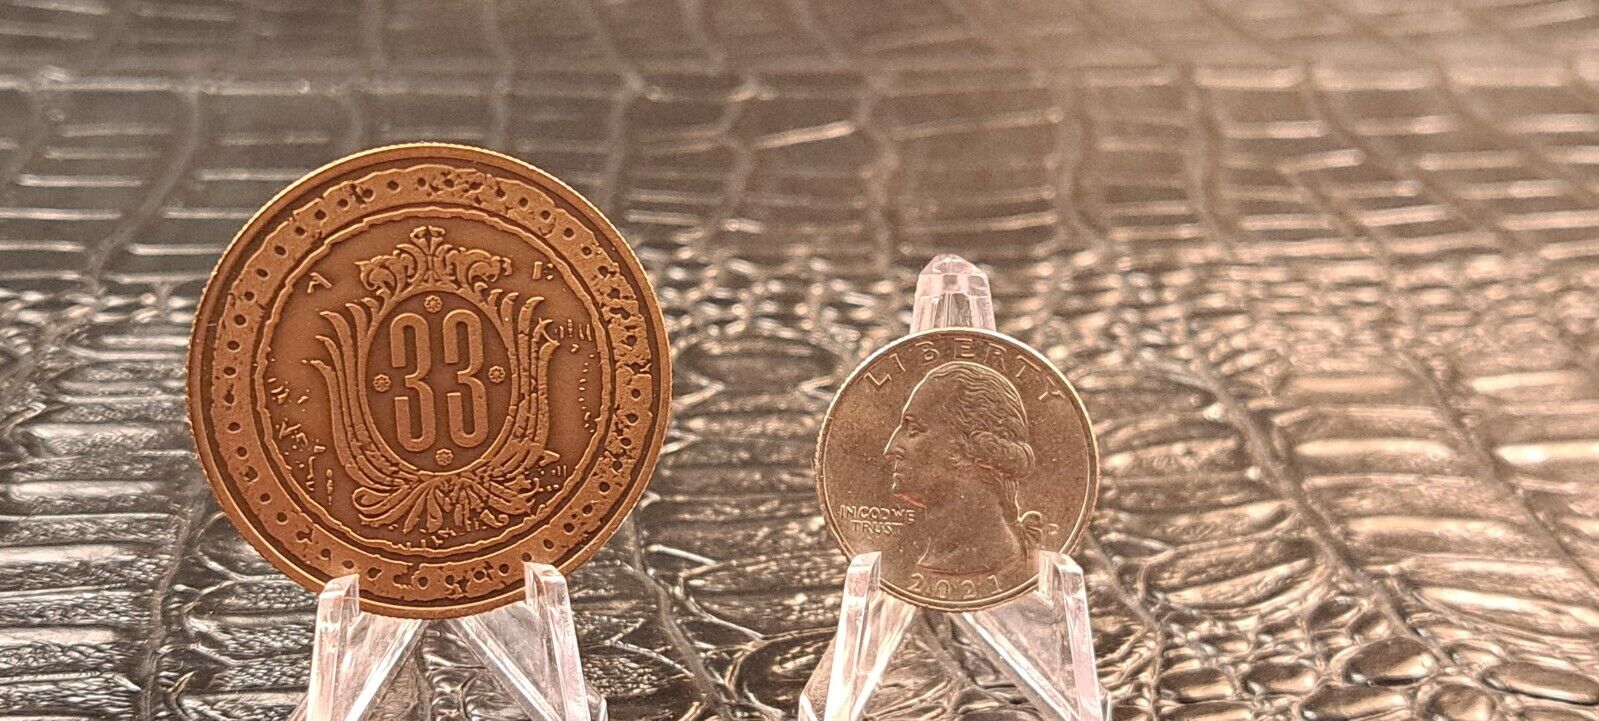 Pirates of the Caribbean 55th Anniversary Club 33 Disney Solid Bronze Coin Rare